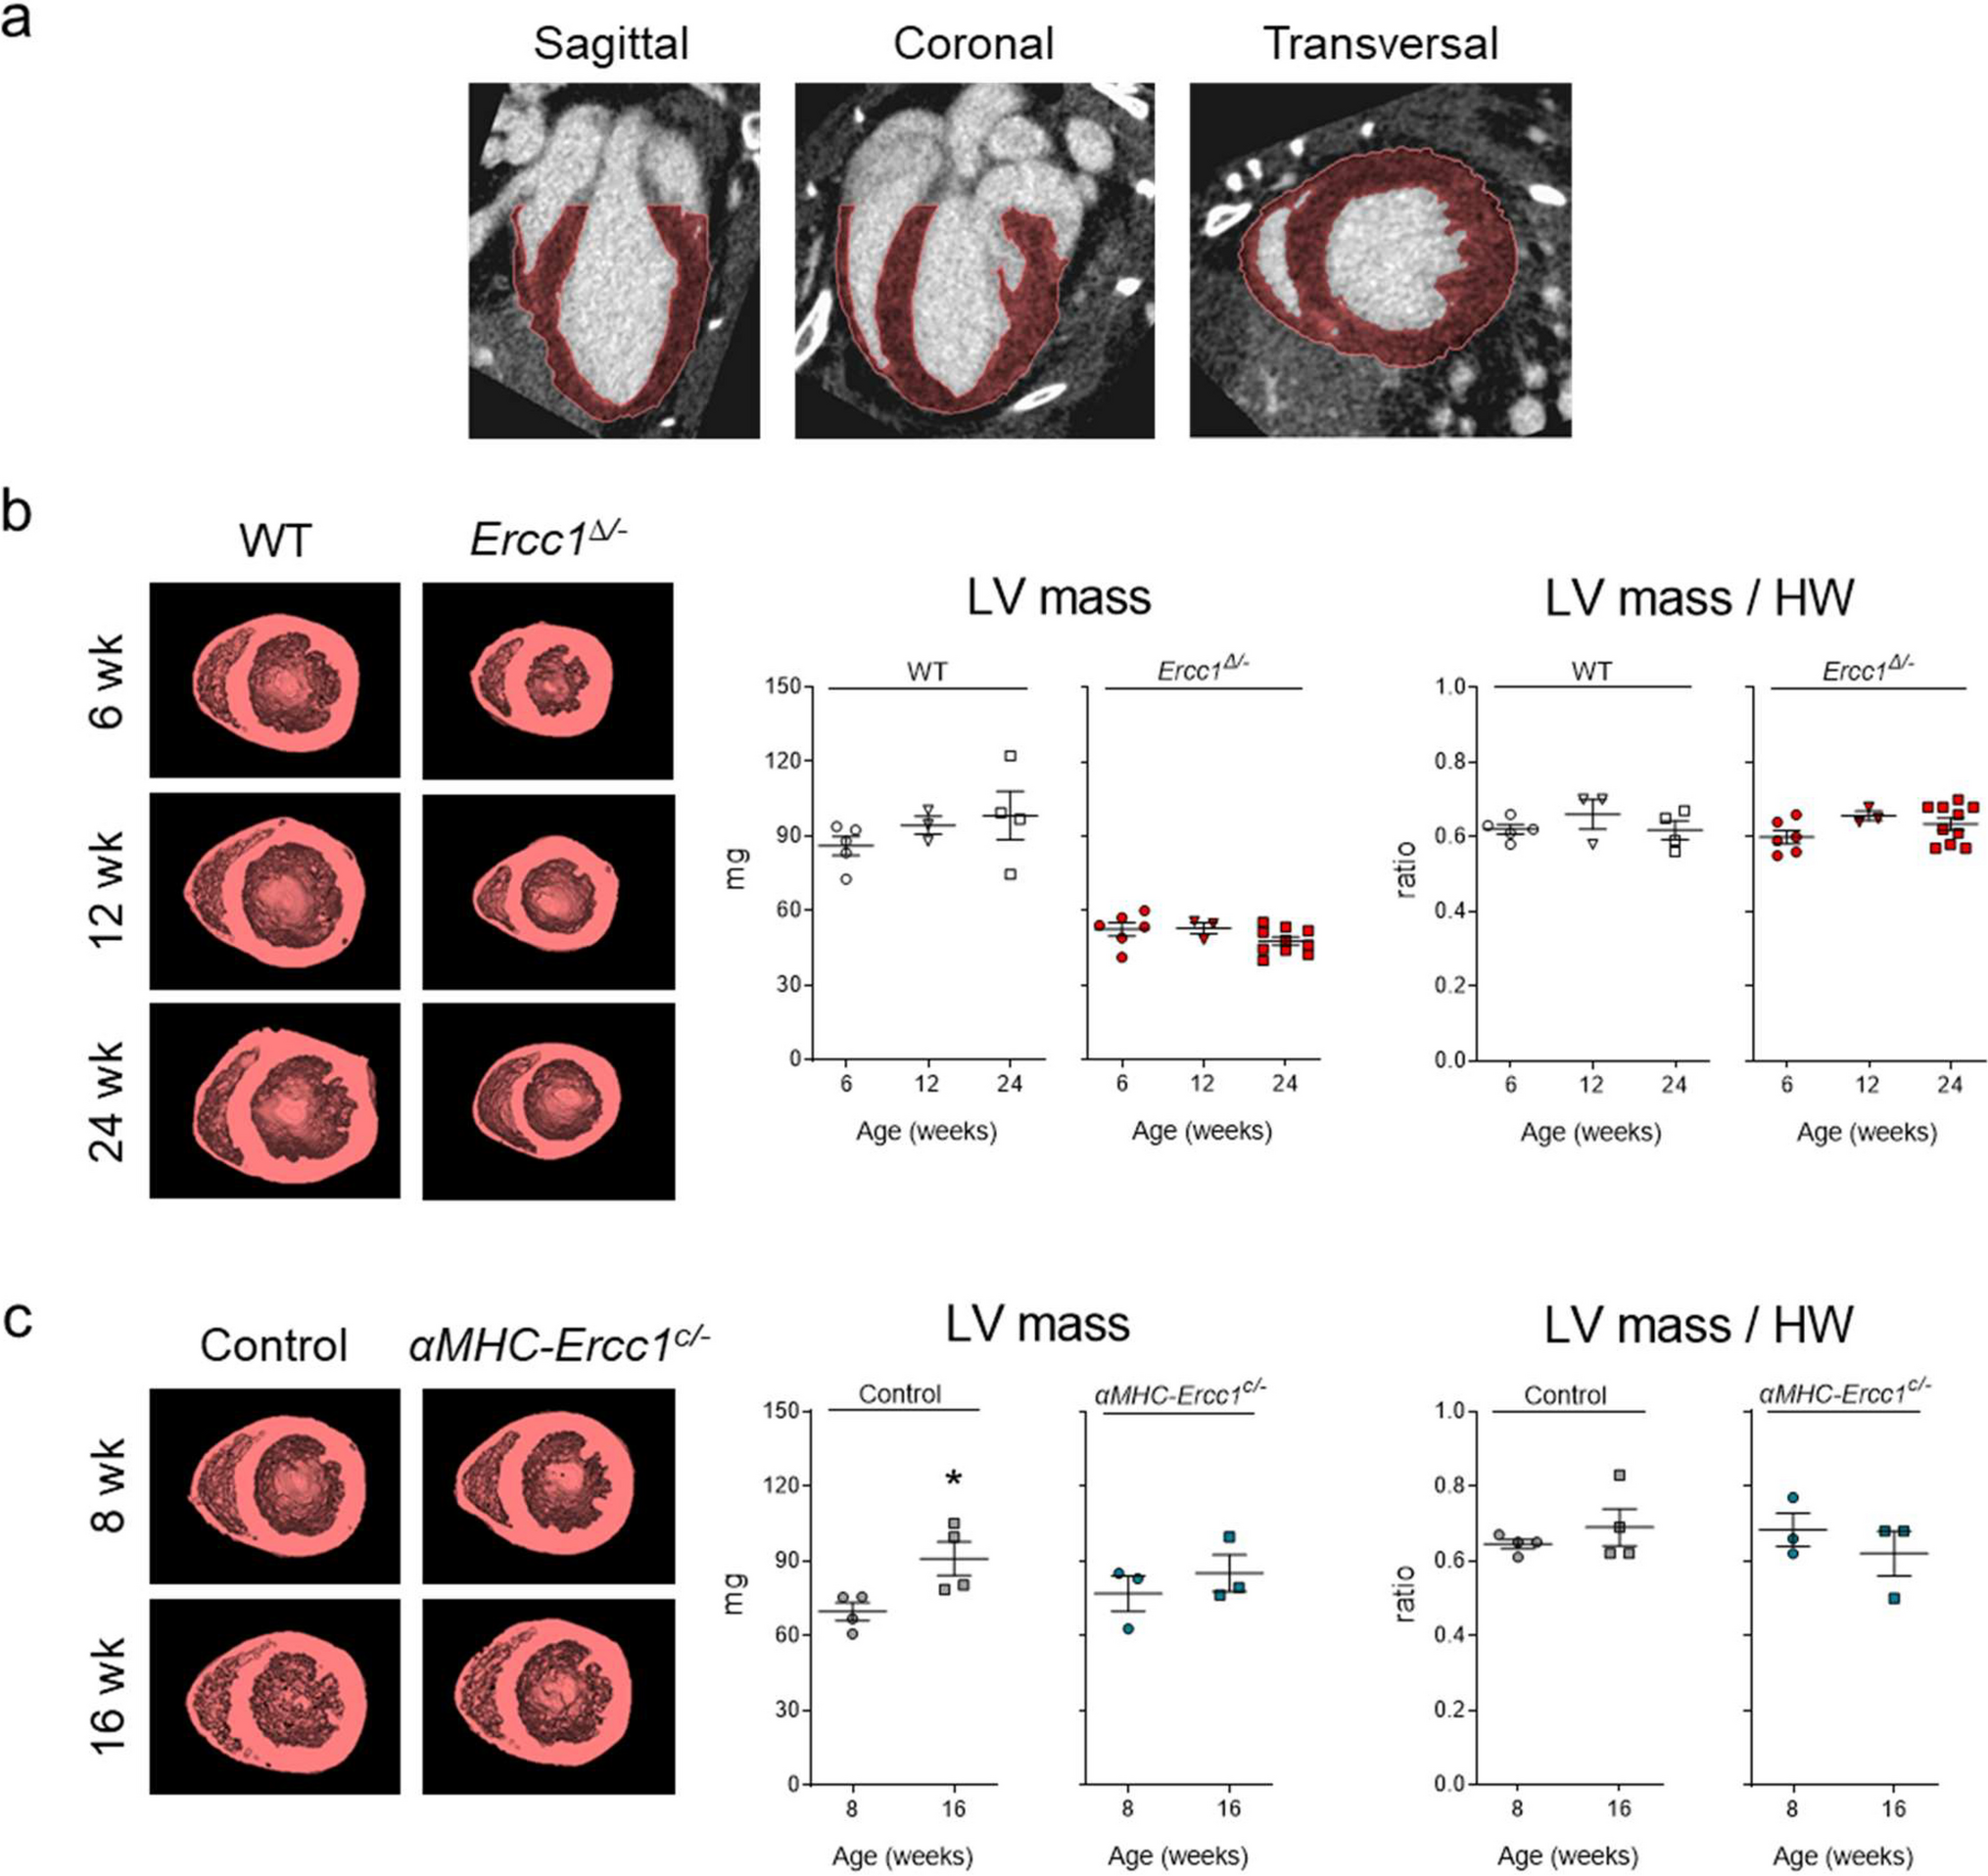 Hybrid Molecular and Functional Micro-CT Imaging Reveals Increased Myocardial Apoptosis Preceding Cardiac Failure in Progeroid Ercc1 Mice